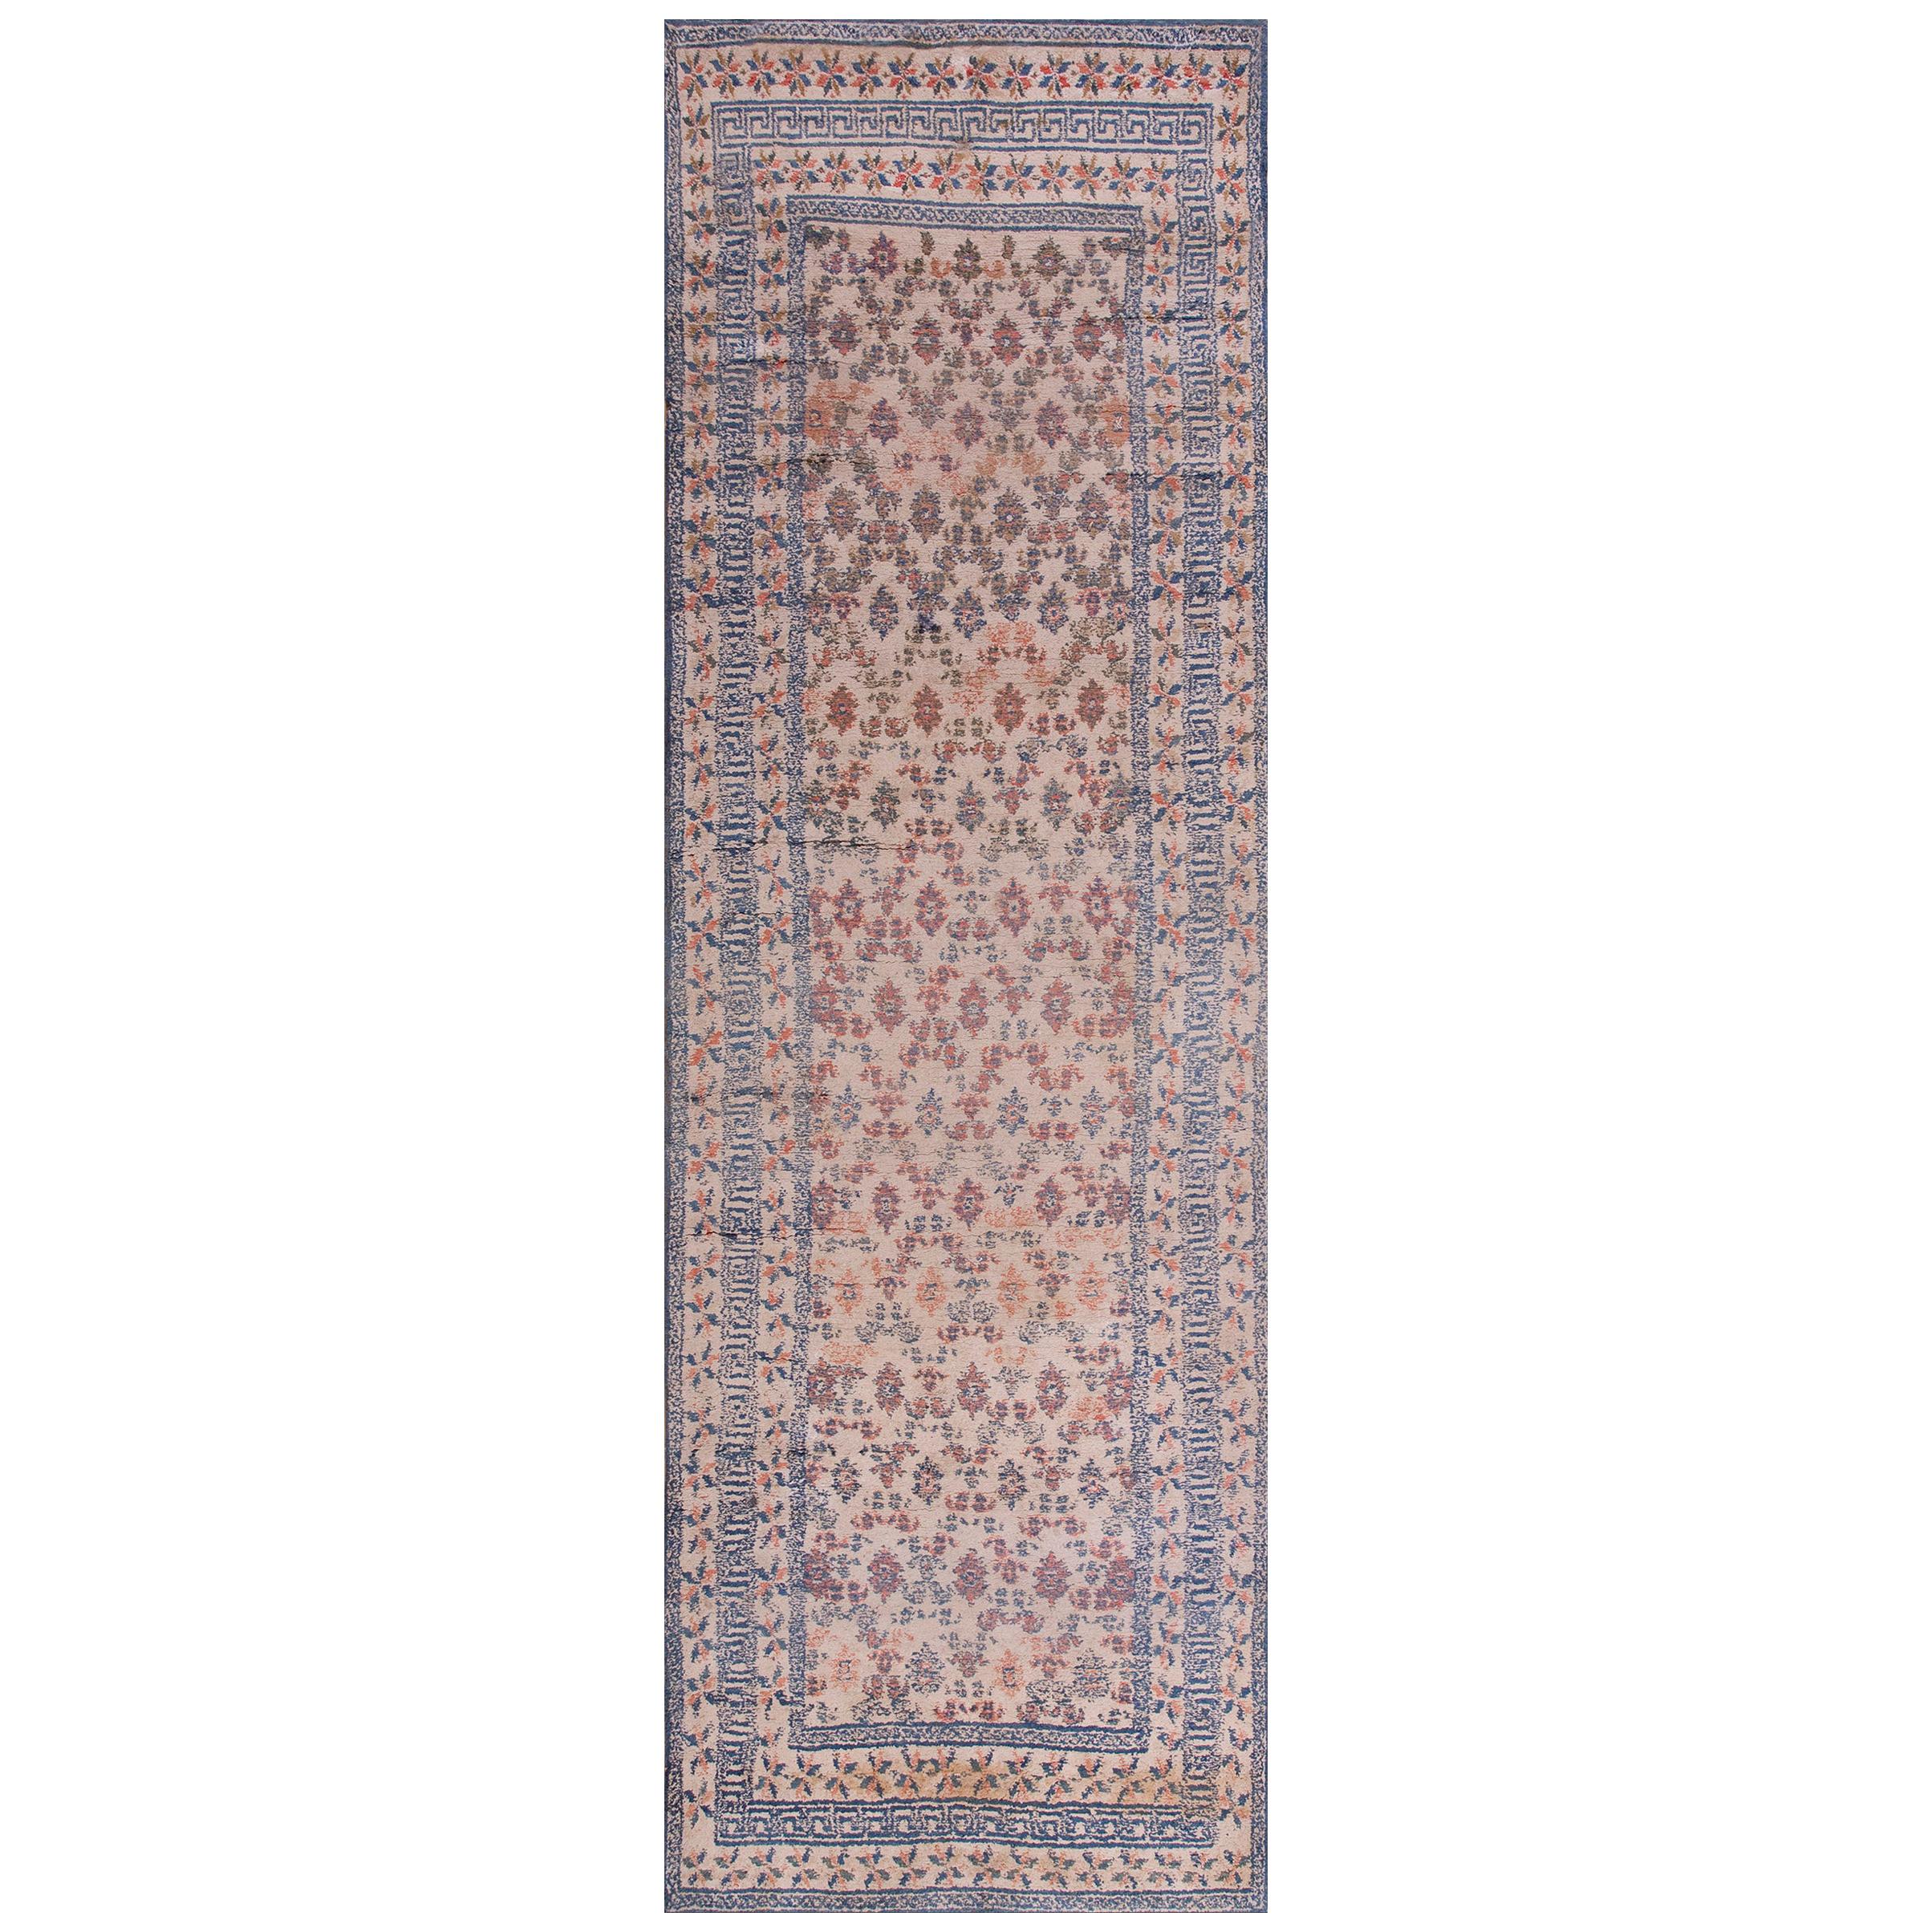  Antique Indian Agra Cotton Rug